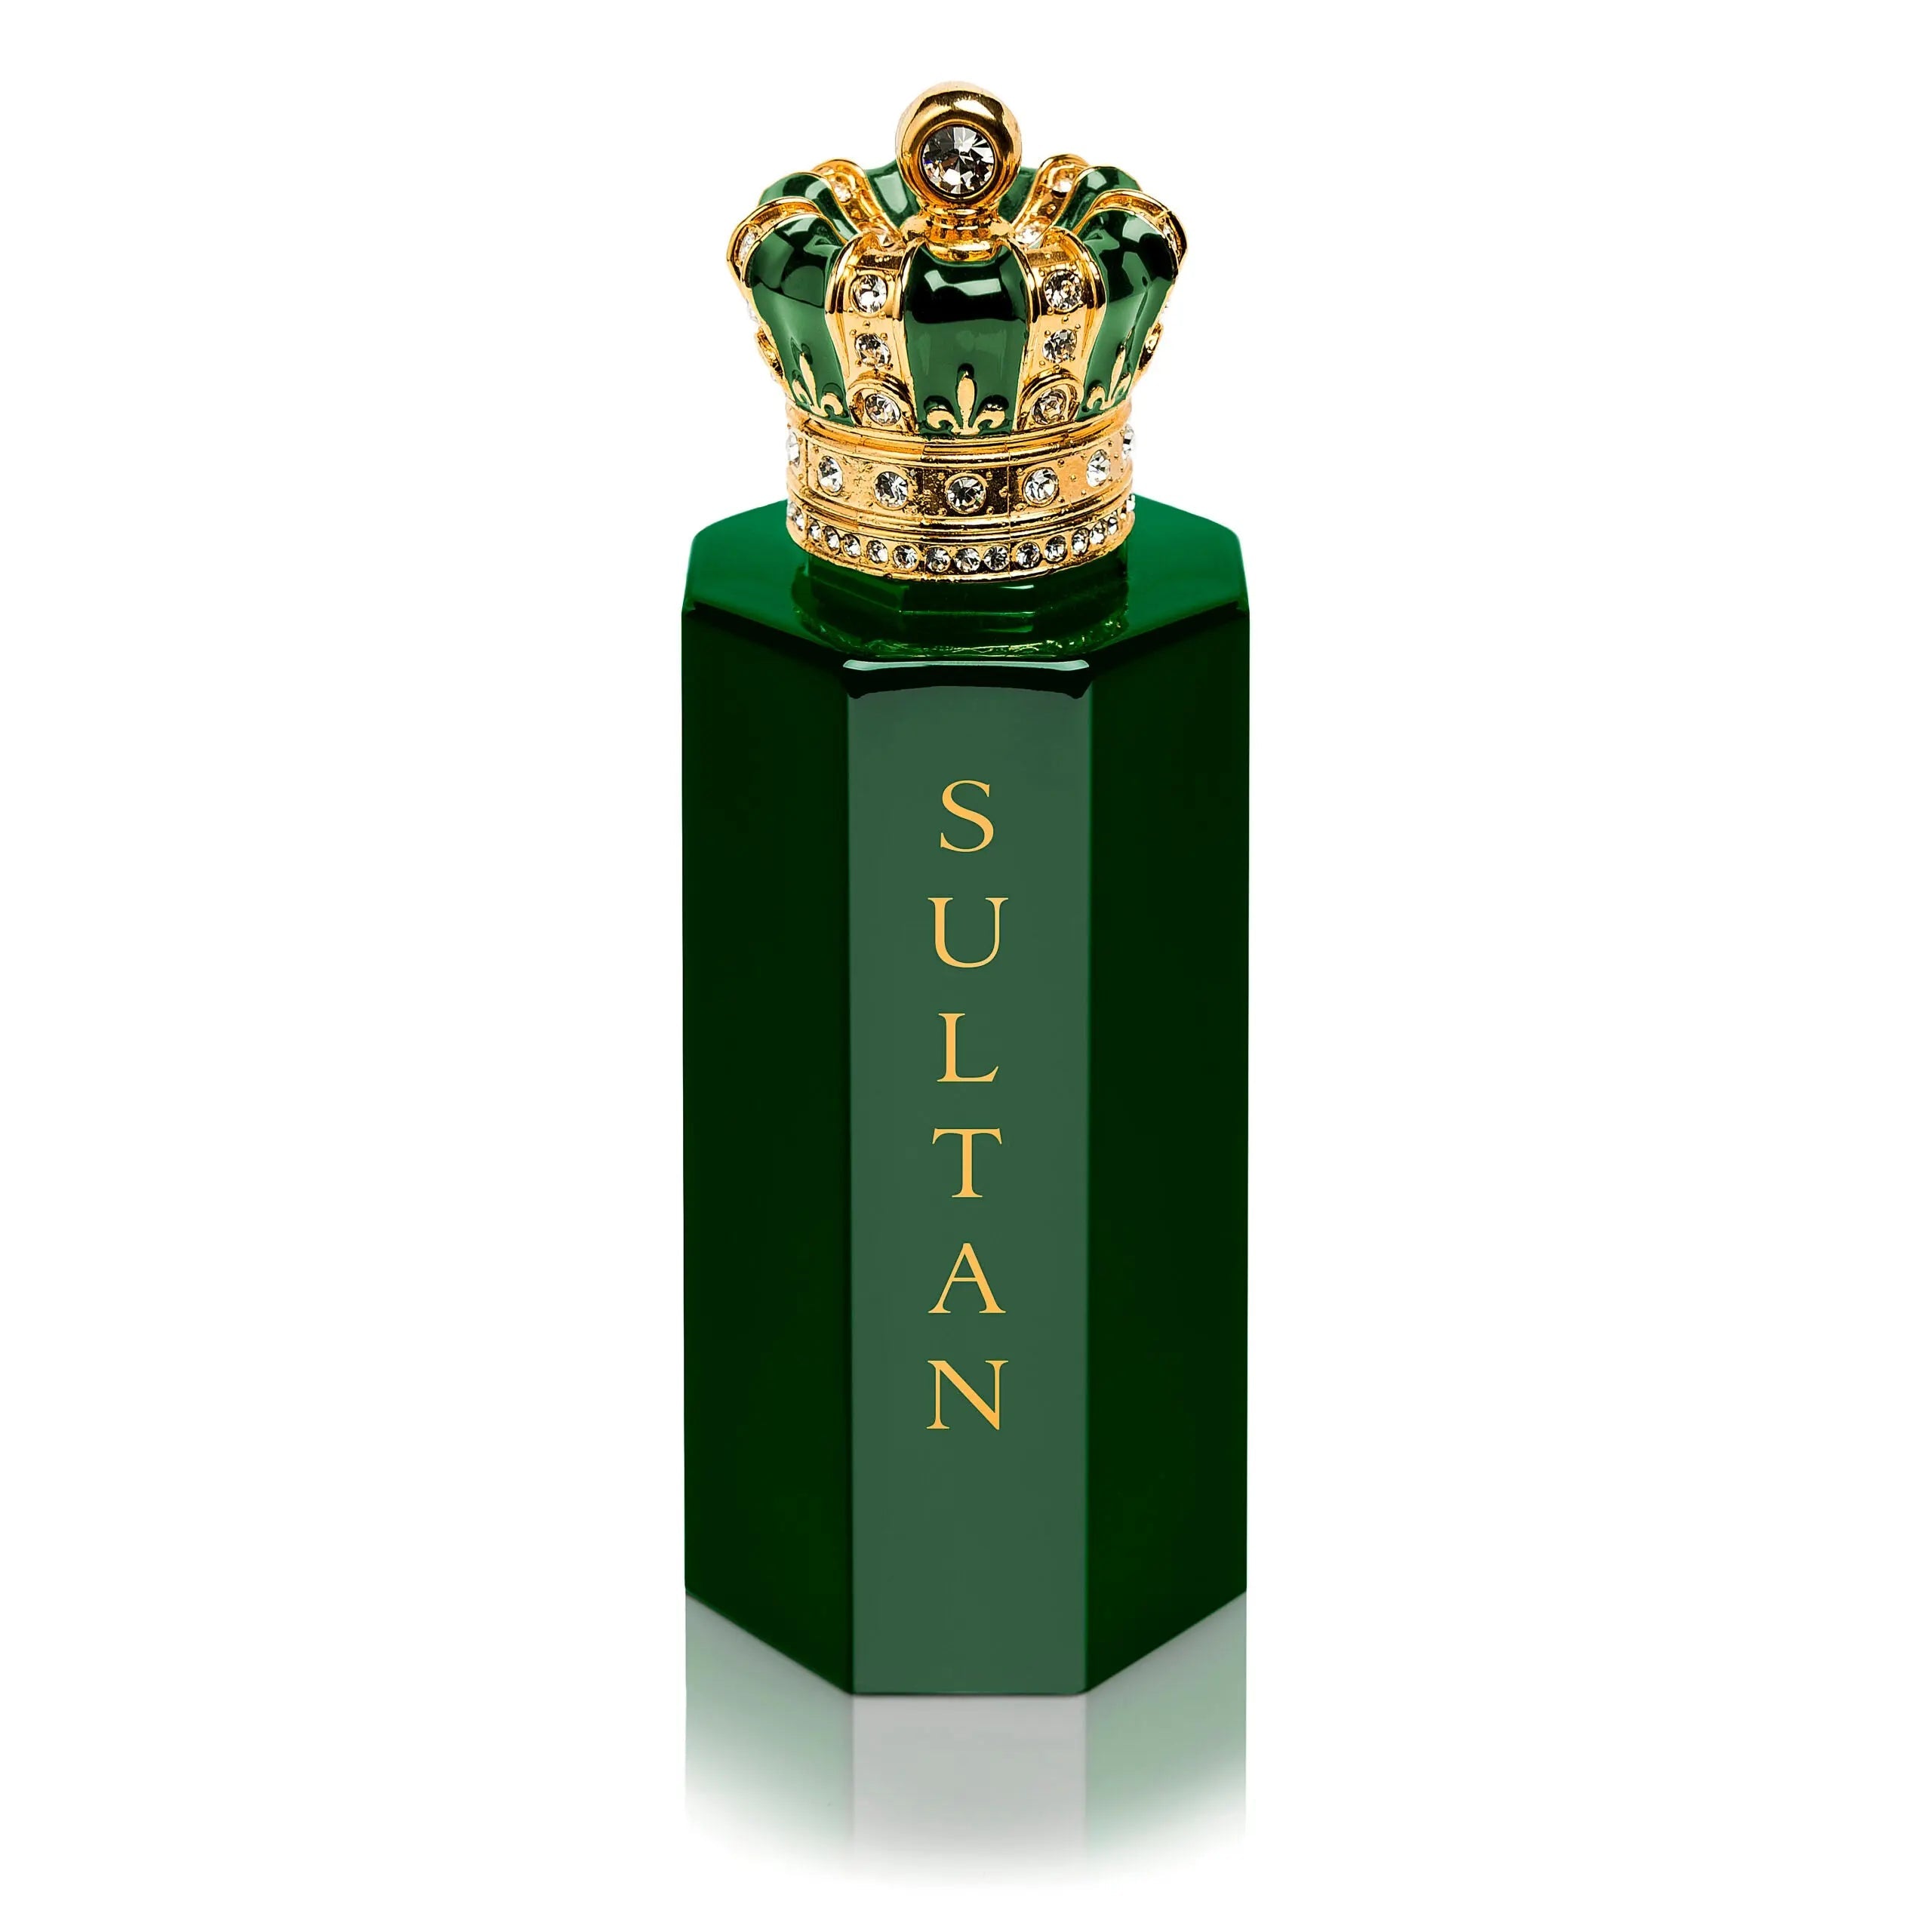 Corona Real del Sultán - 50 ml